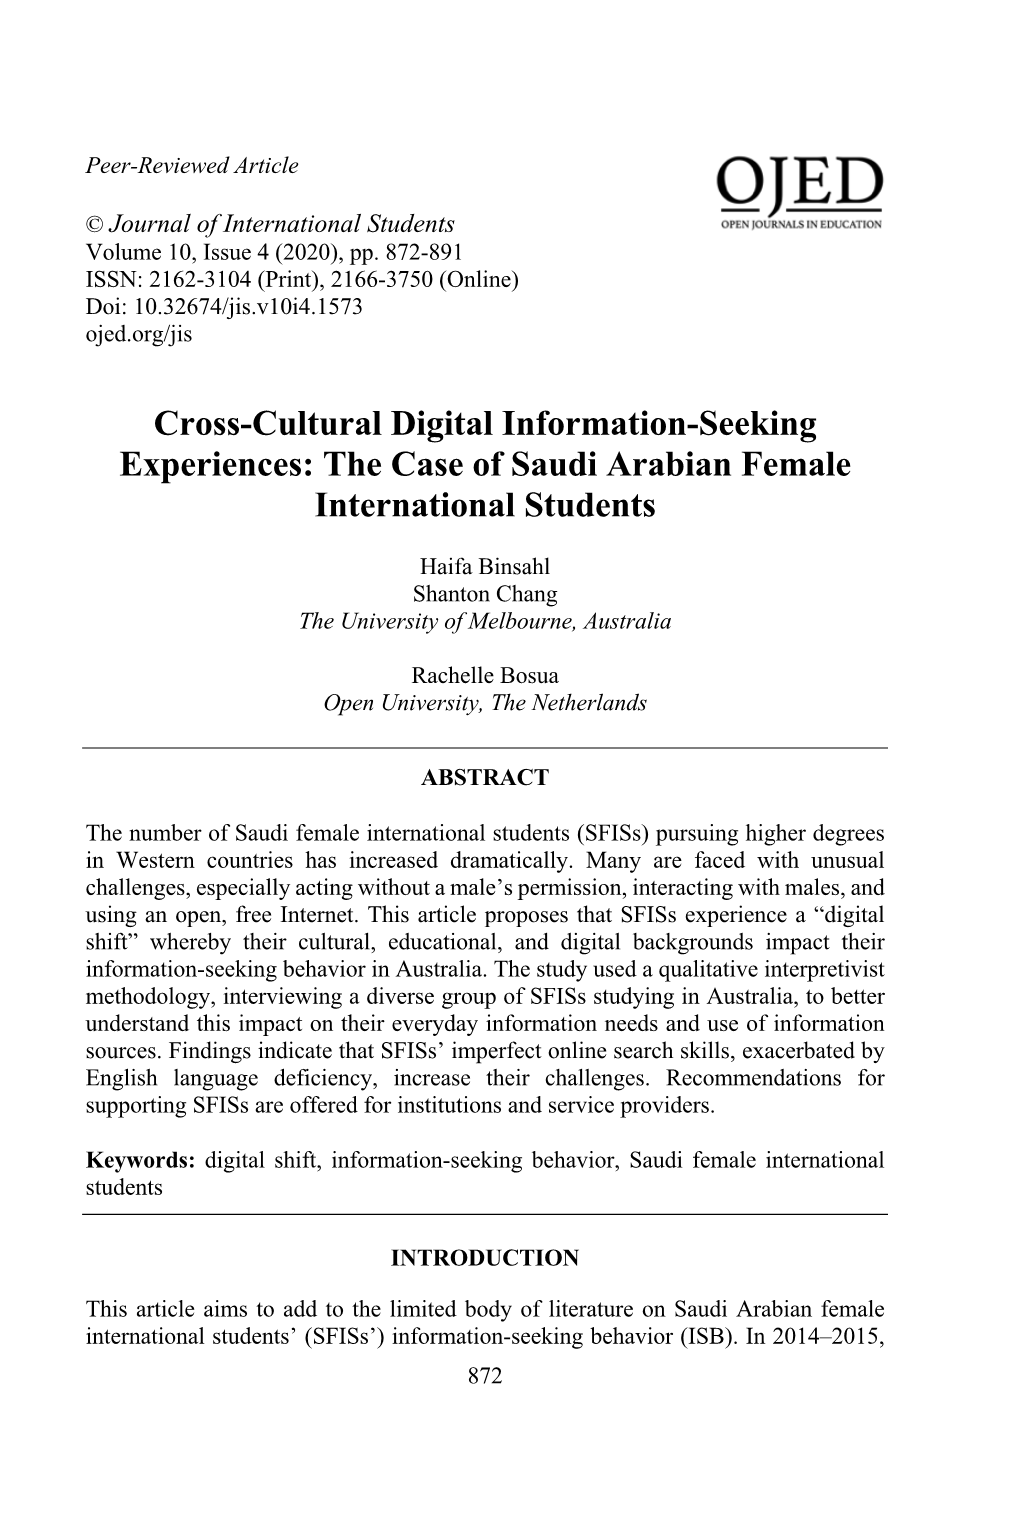 The Case of Saudi Arabian Female International Students